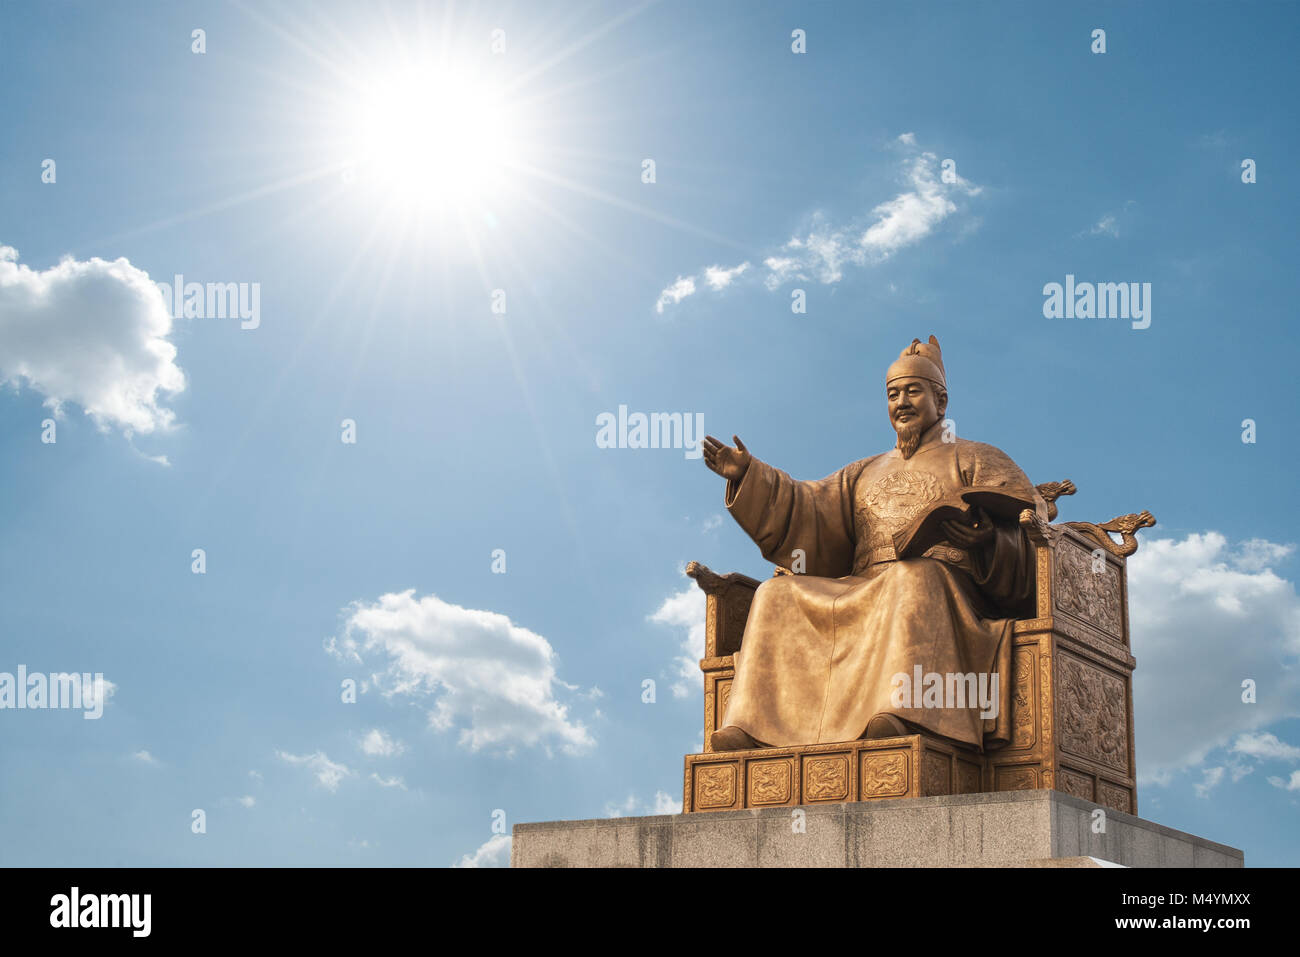 The Statue of King Sejong inn Gwanghwamun Square in Seoul Stock Photo